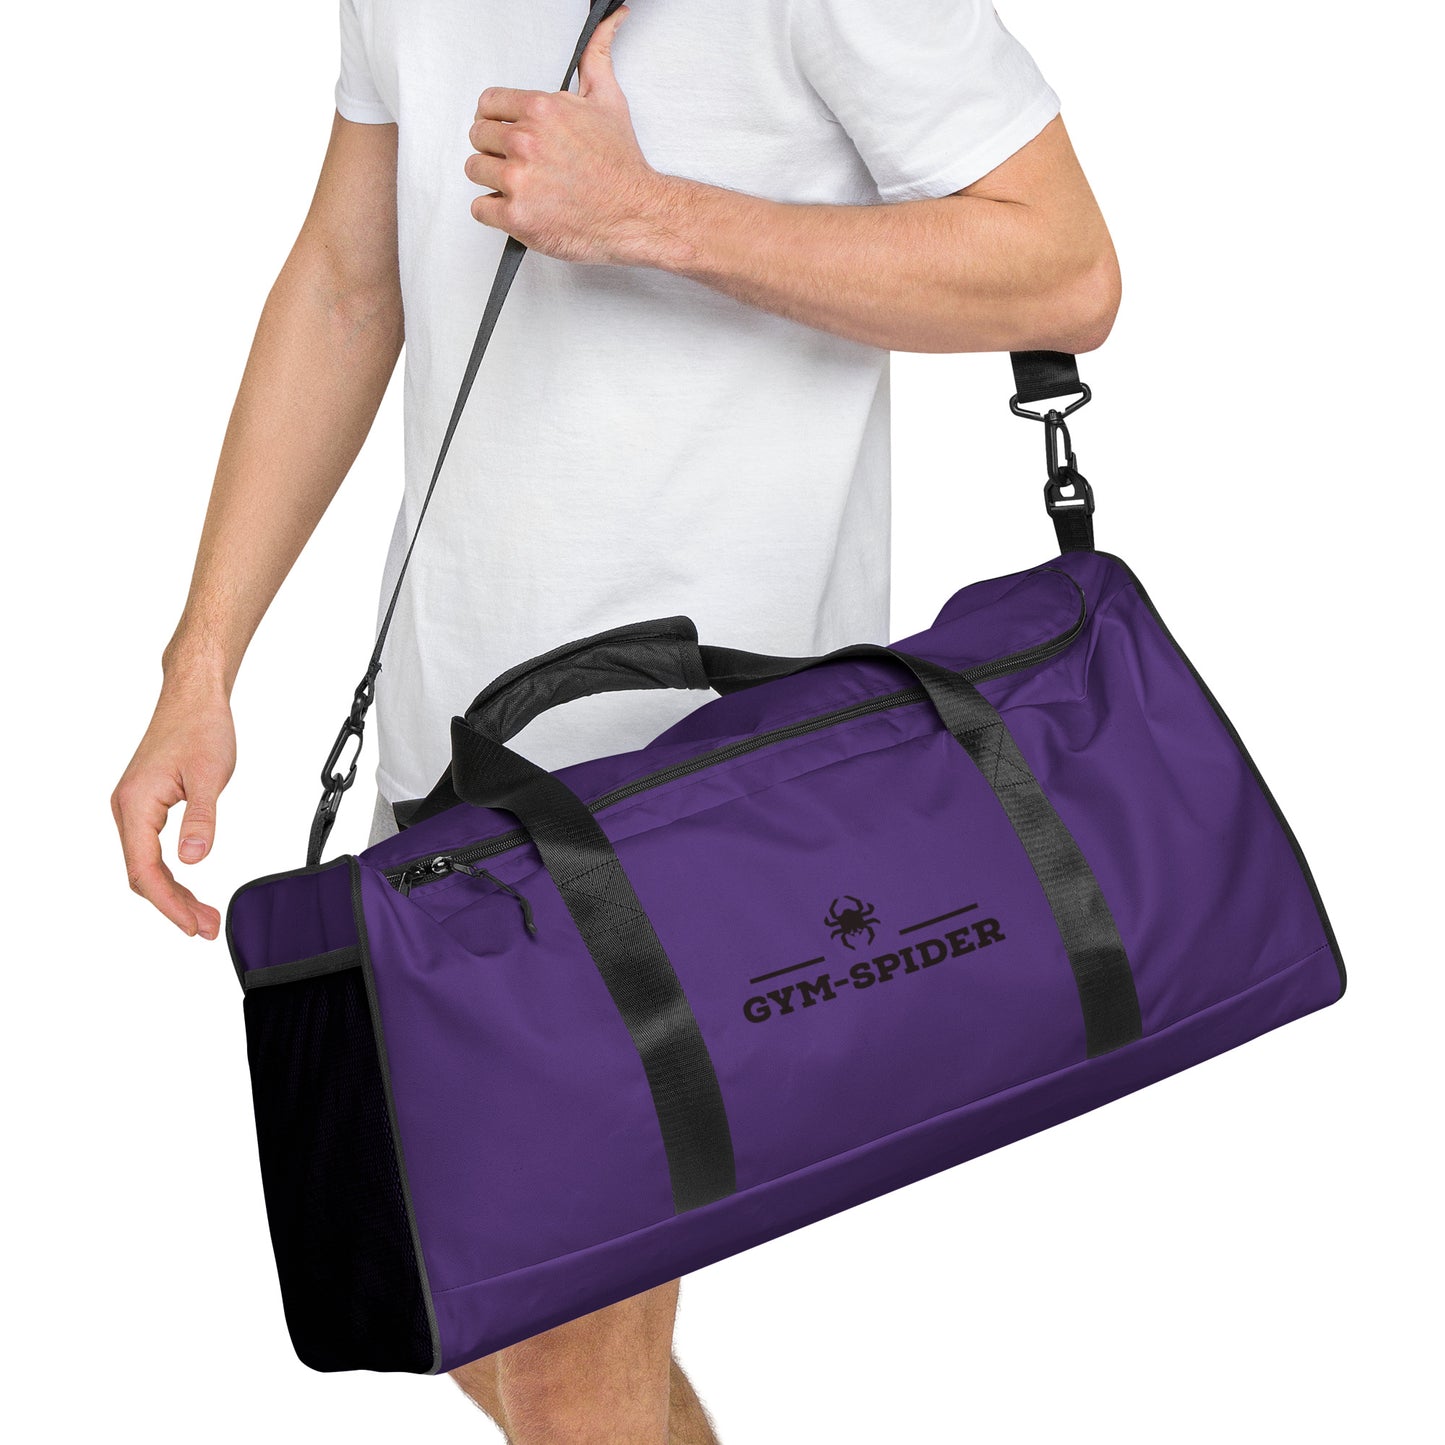 Gym-Spider Duffle Bag